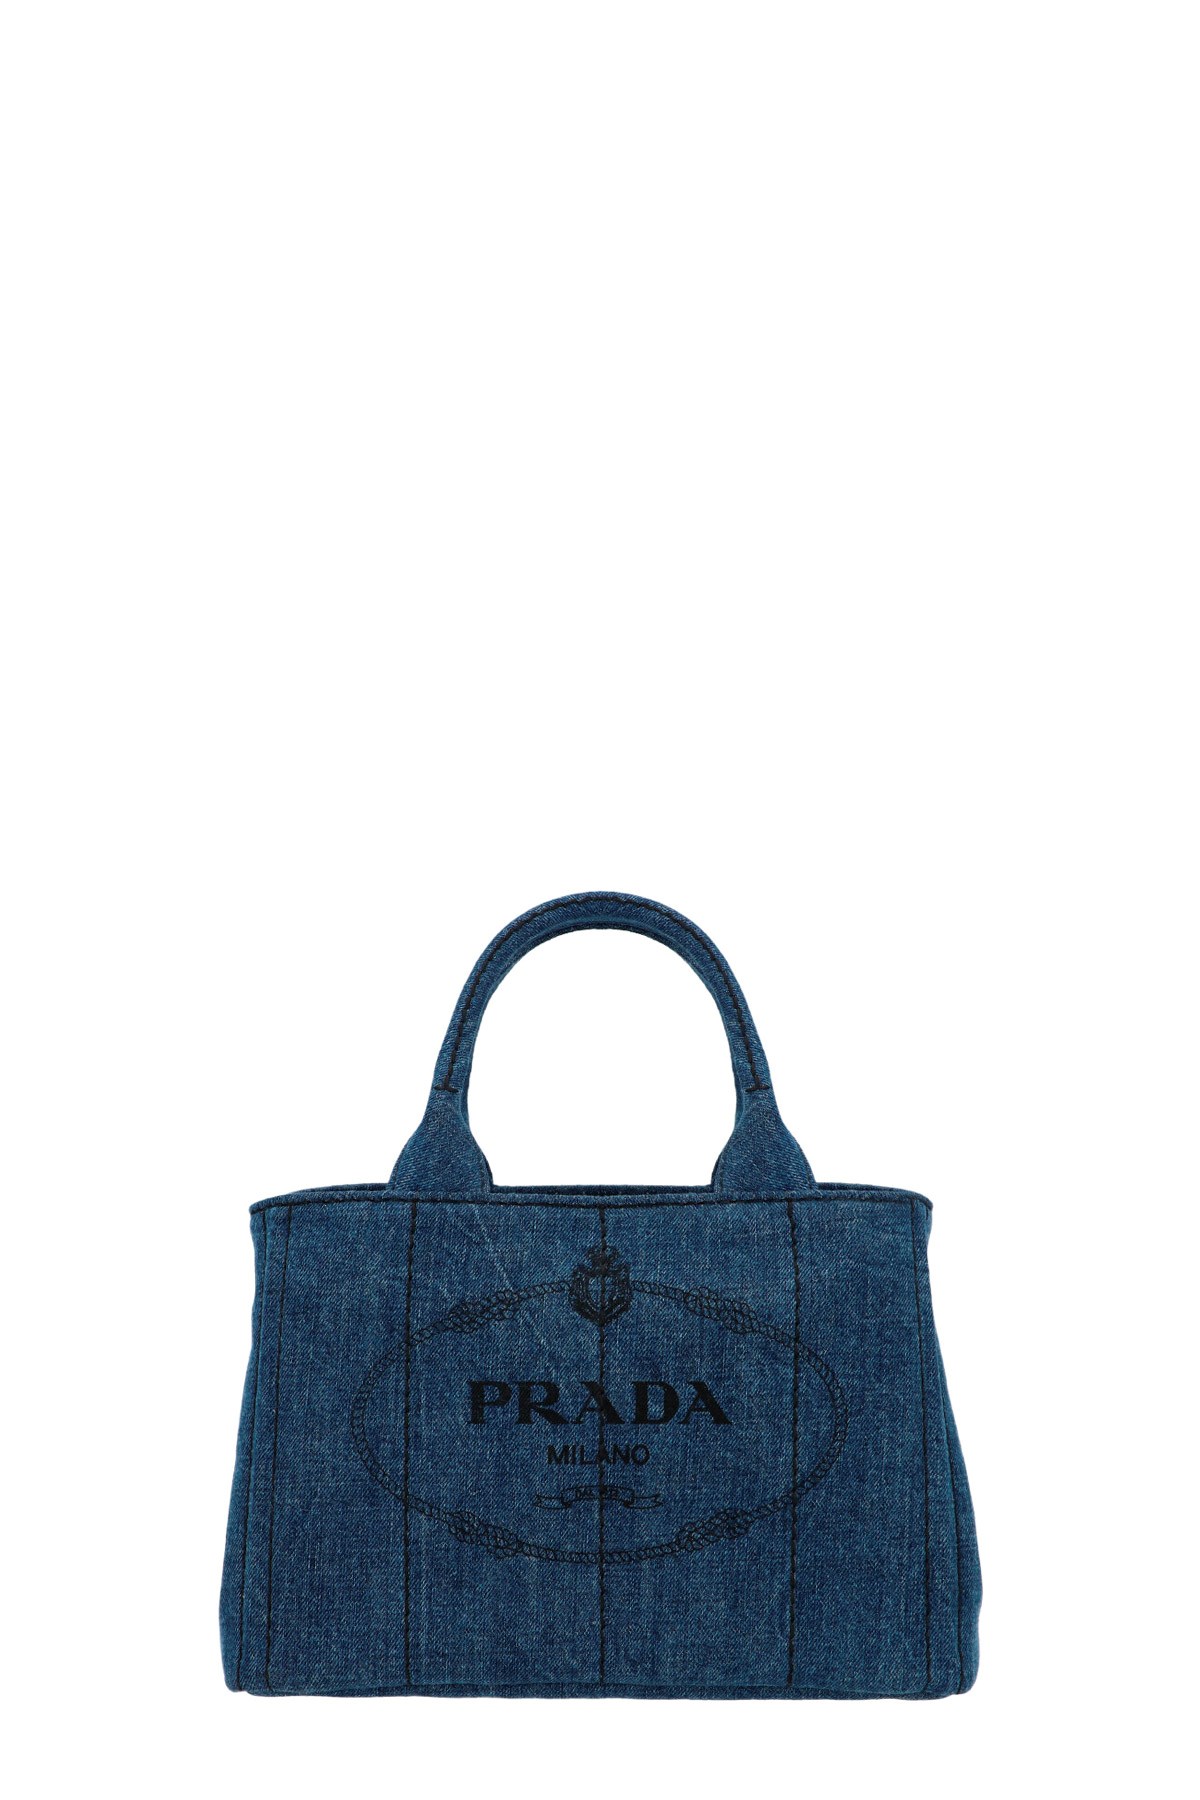 PRADA 'Giardiniera’ Denim Shopping Bag